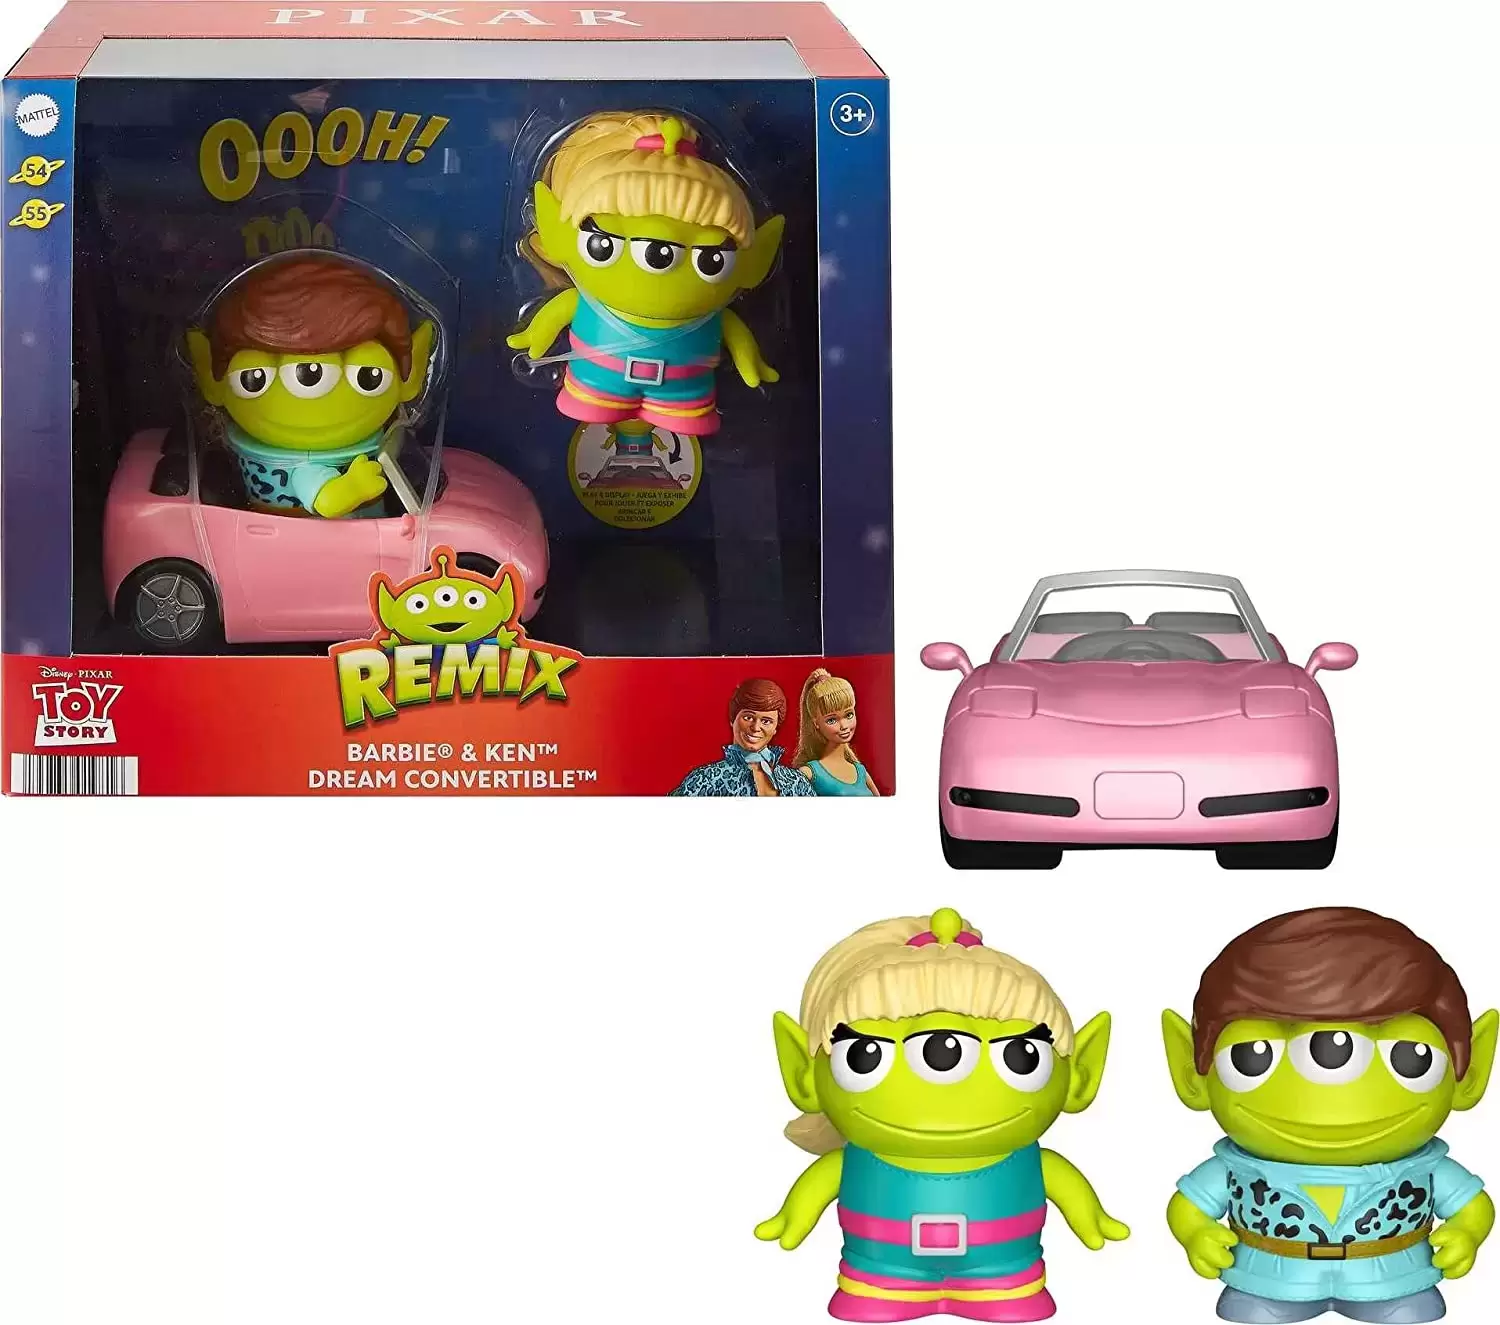 Alien Pixar Remix - Barbie and Ken Dream Convertible Pack